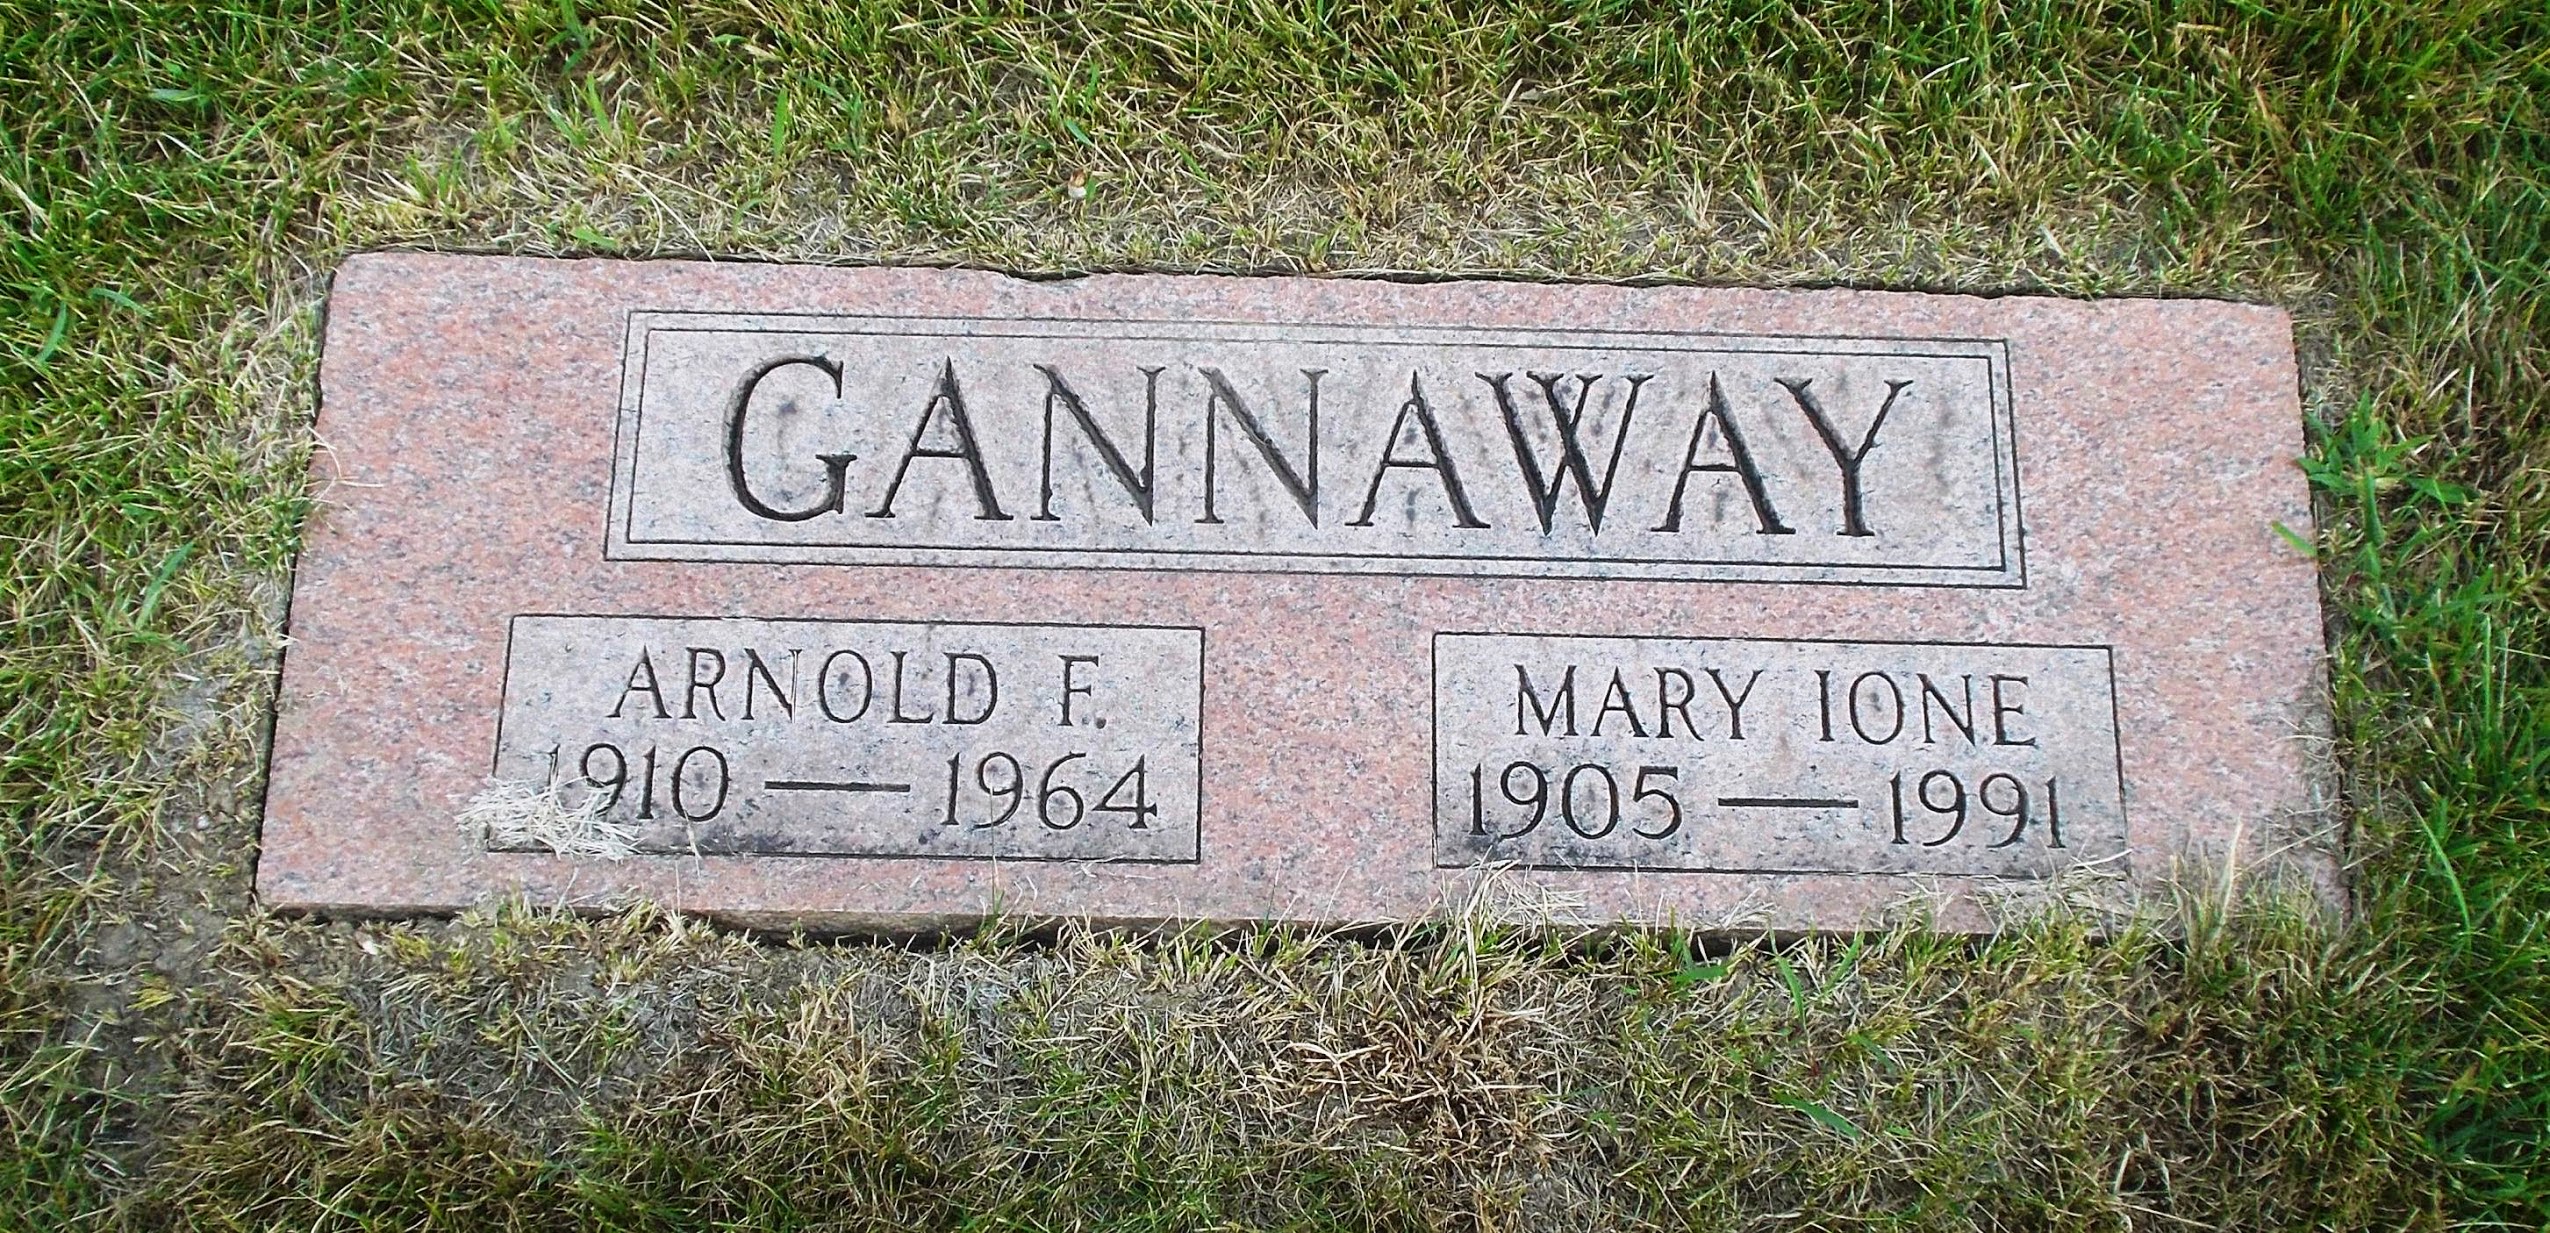 Arnold F Gannaway